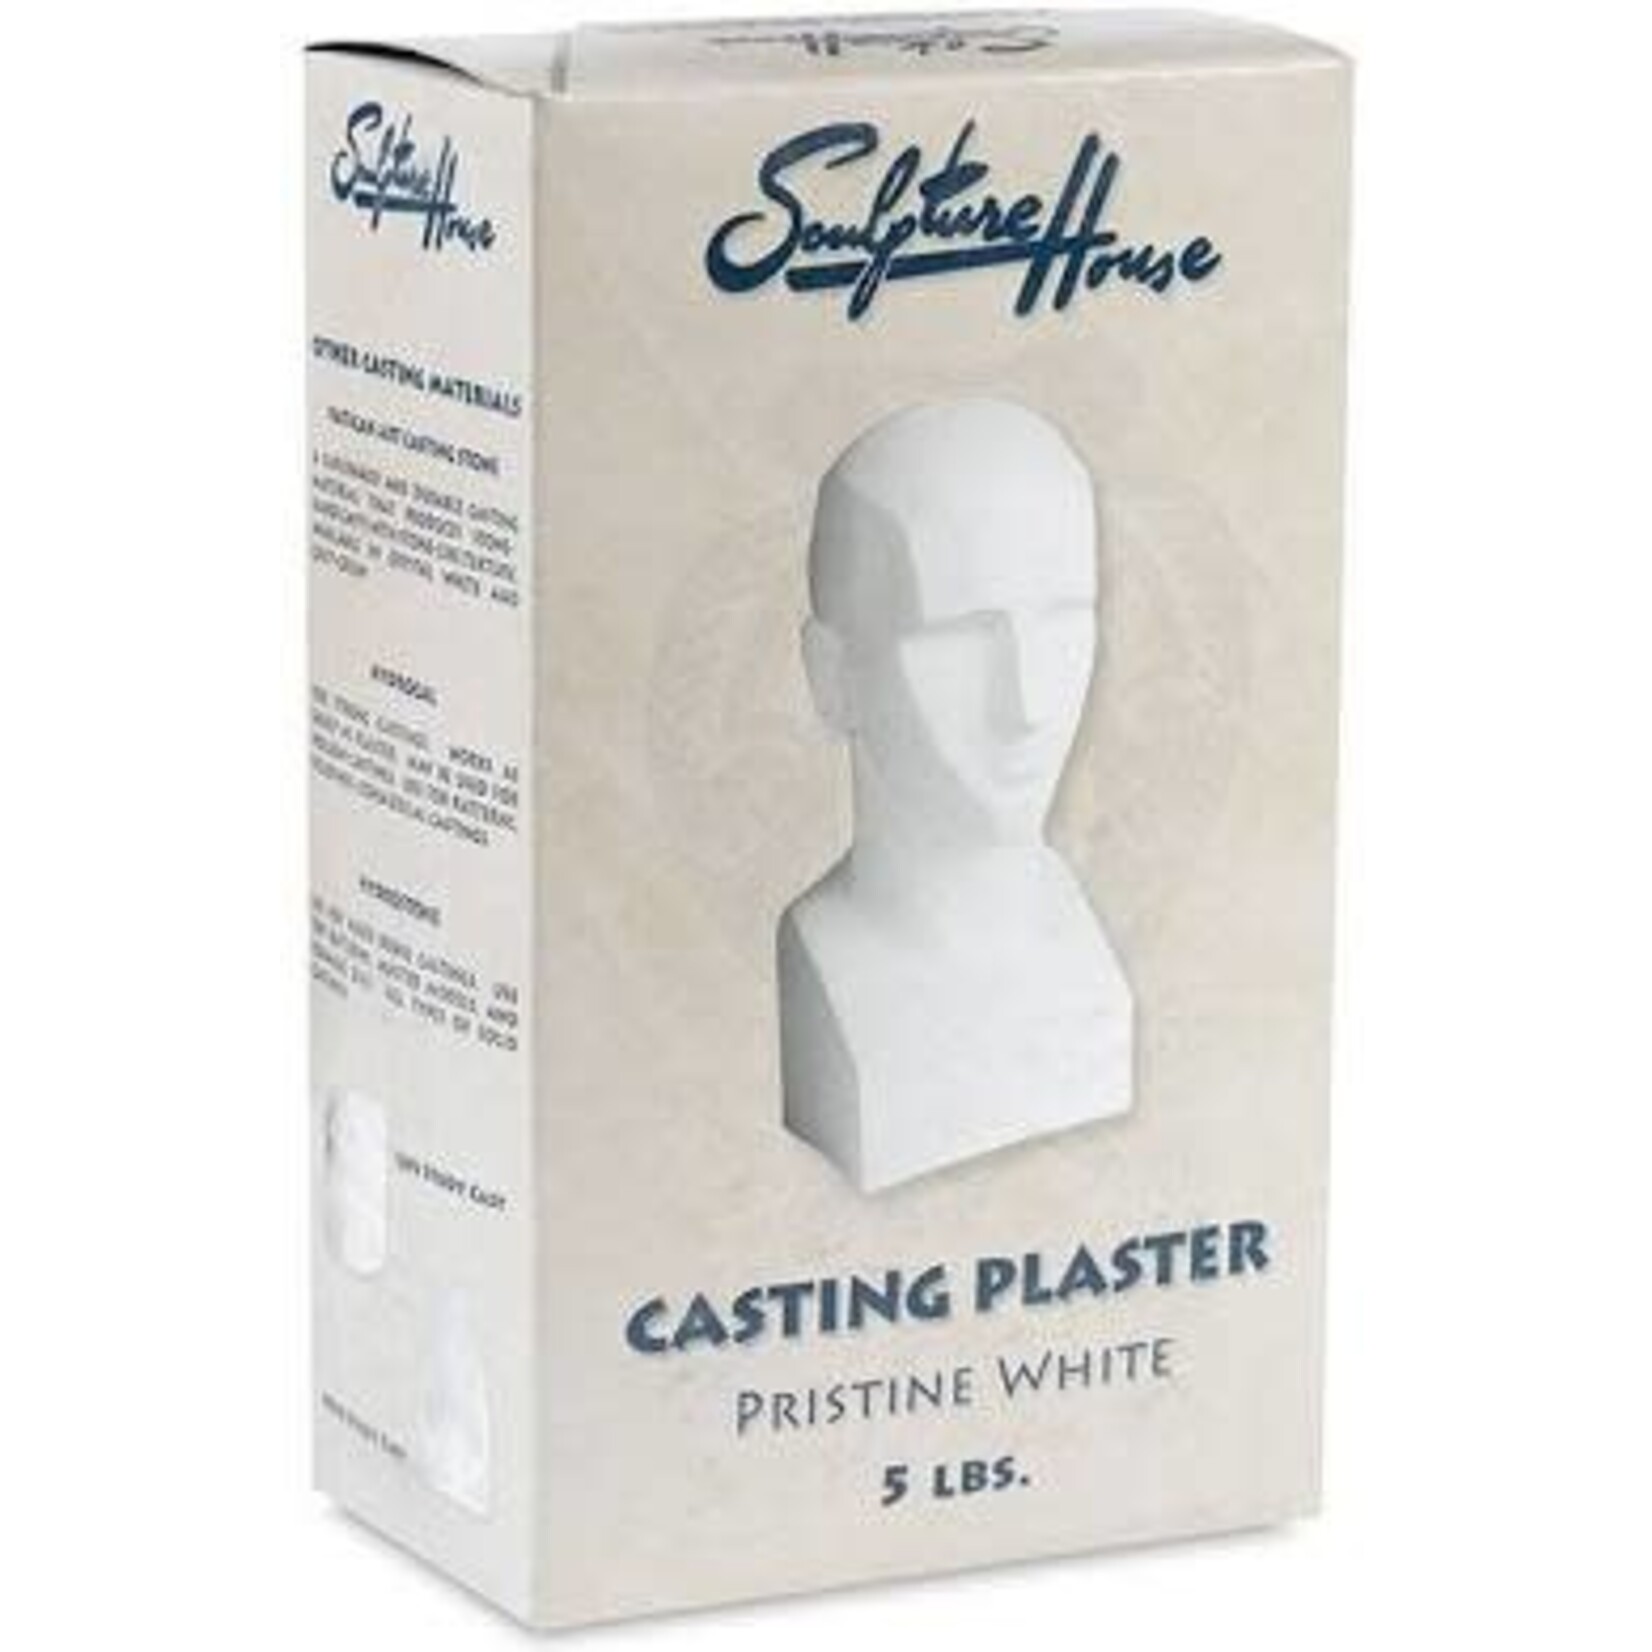 Sculpture House Pristine White Casting Plaster - 5Lbs